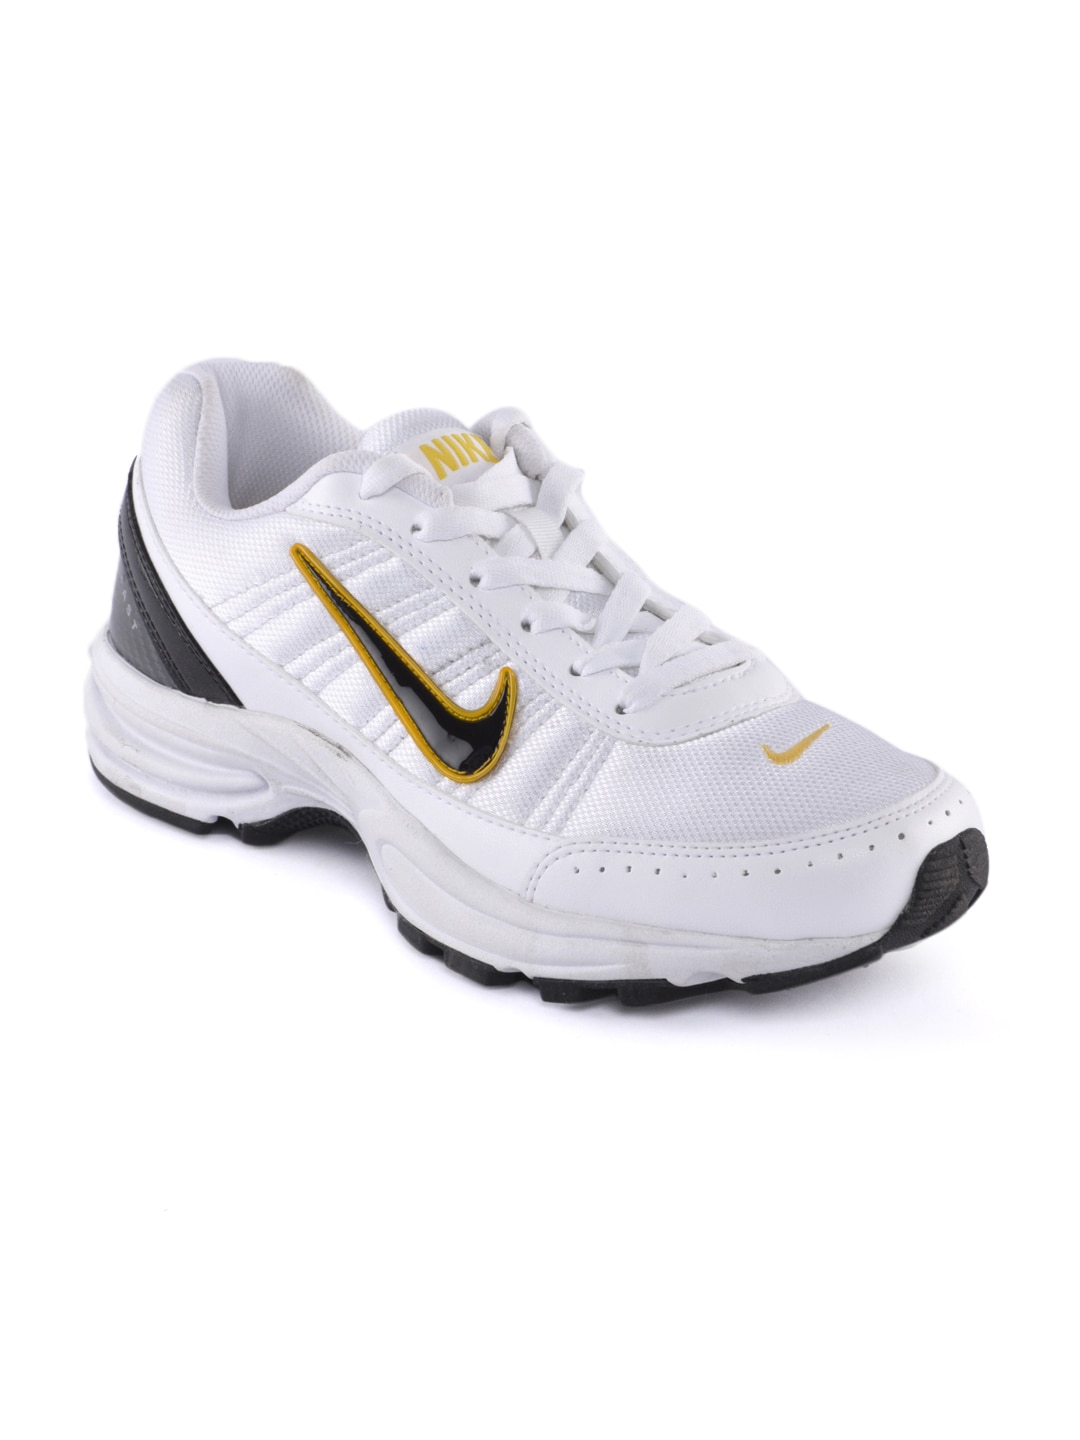 Nike Men Transform III White Sports Shoes